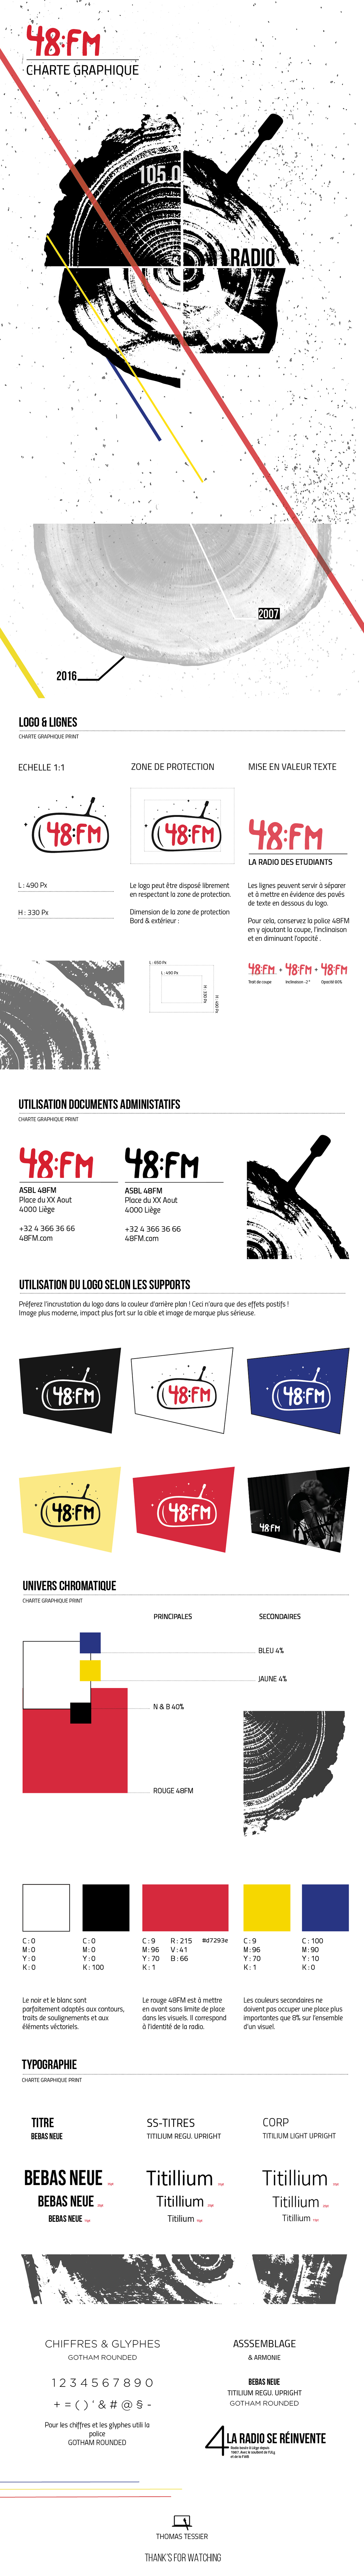 design editorial graphisme print UNIVERS CHROMATIQUE charte charte graphique Branding' Radio belgium liège color typo